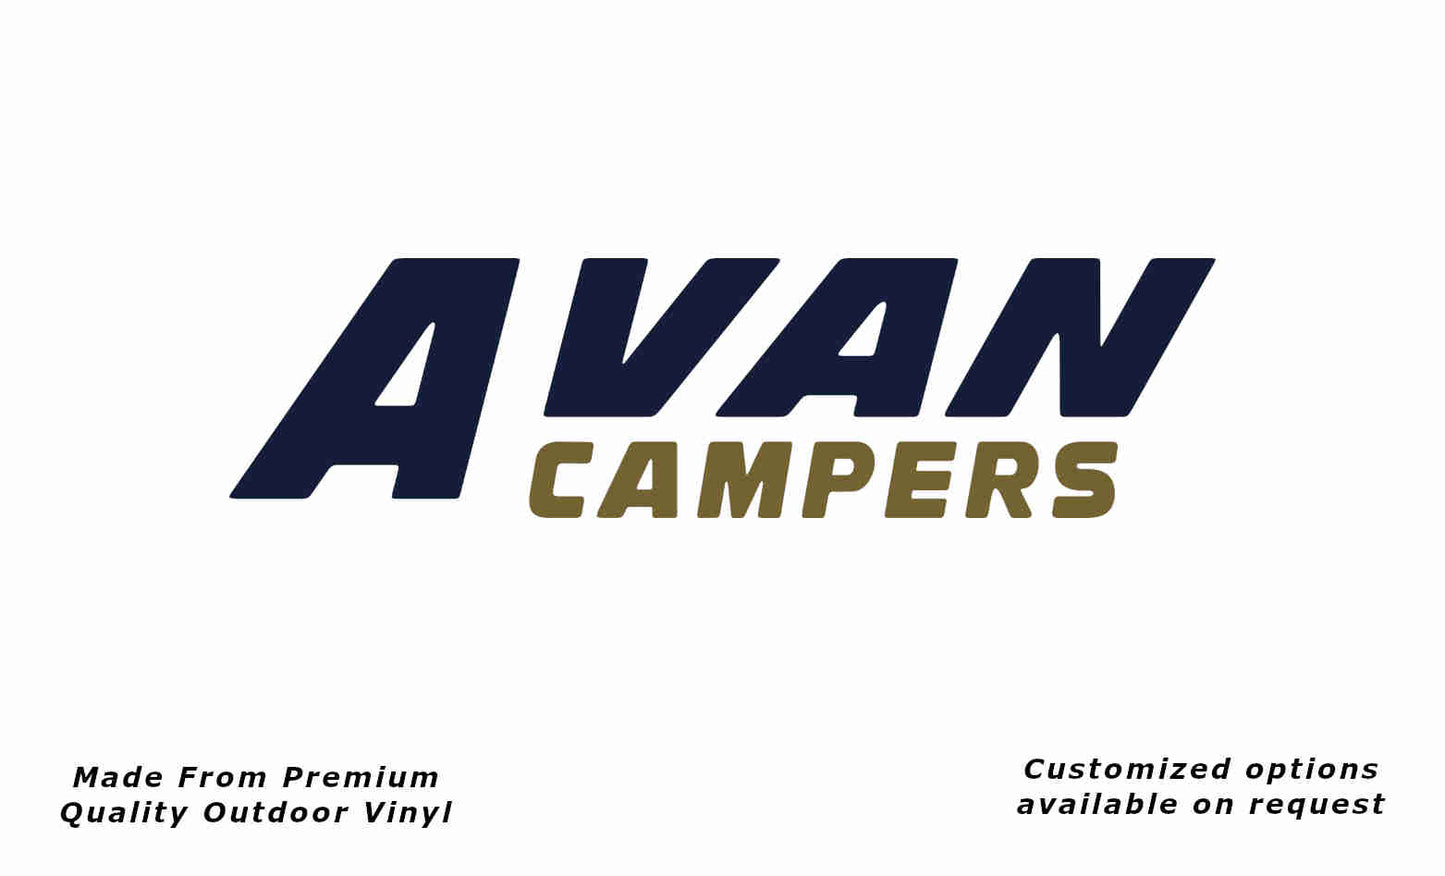 Avan campers caravan replacement vinyl decal sticker in deep sea blue and gold.